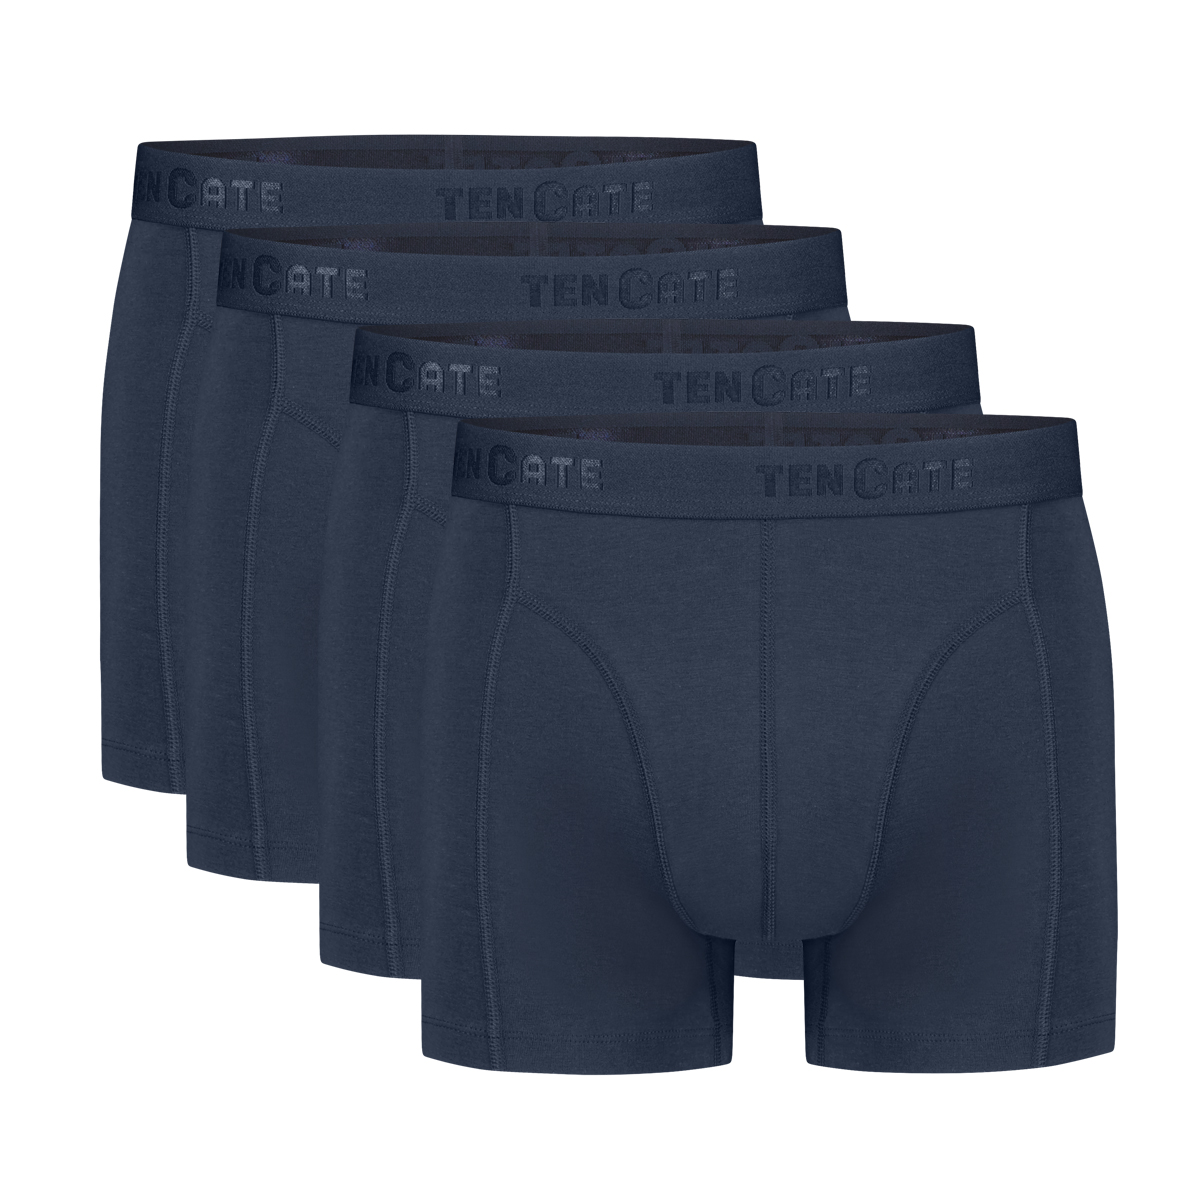 shorts navy 4 pack